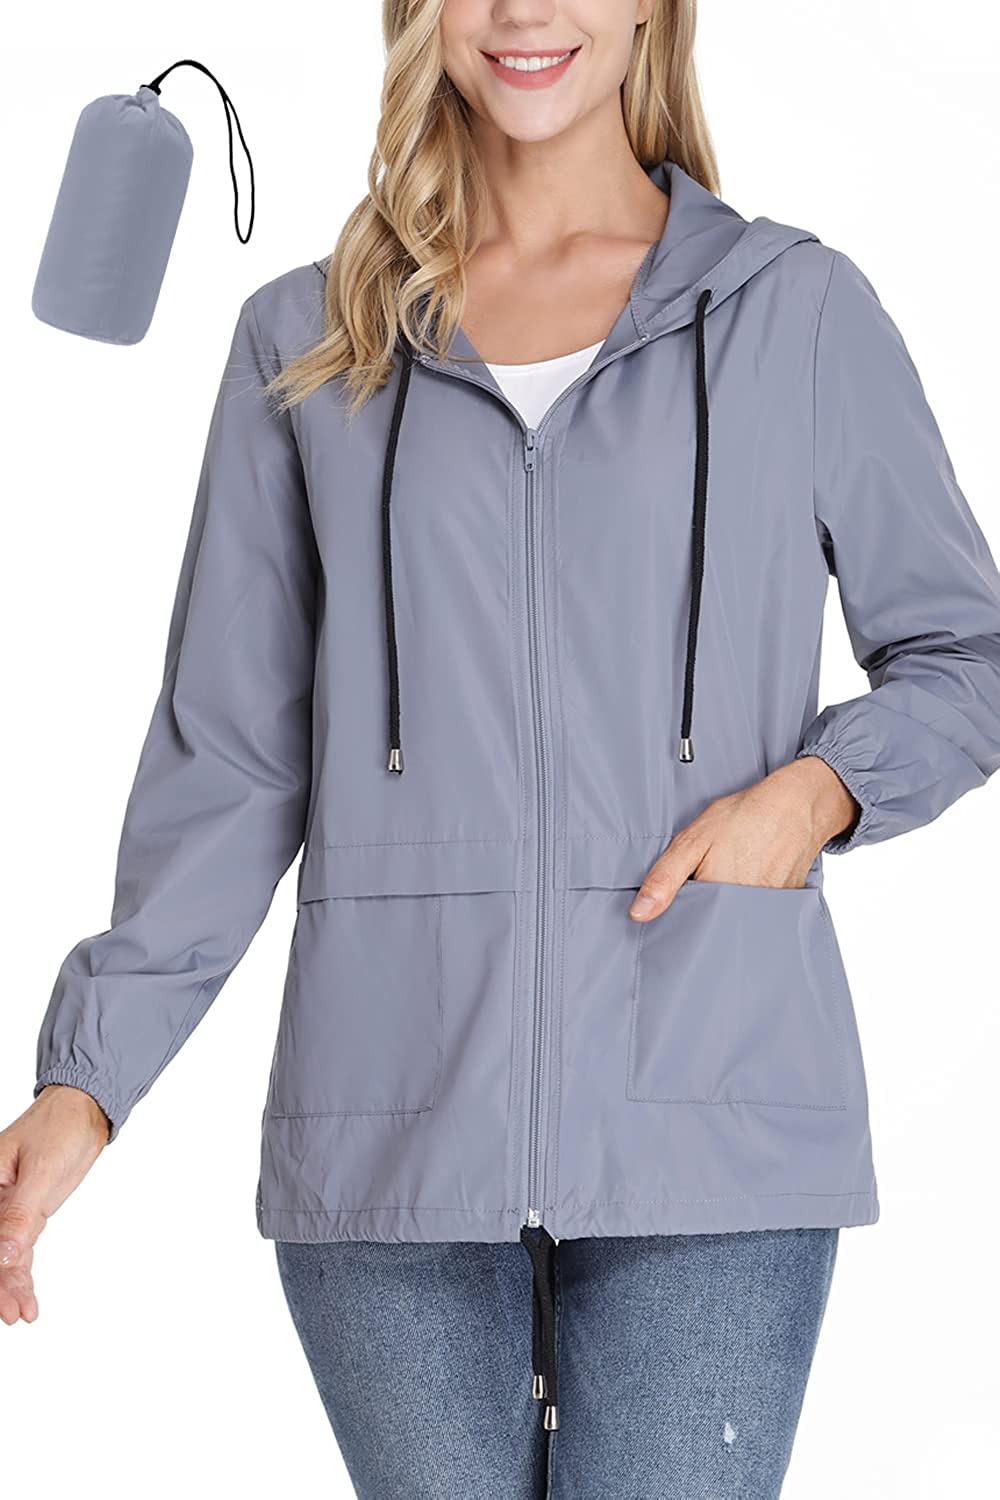 Dakiwin Womens Lightweight Rain Jacket Waterproof Raincoat Packable Hooded Windbreaker Outdoor 